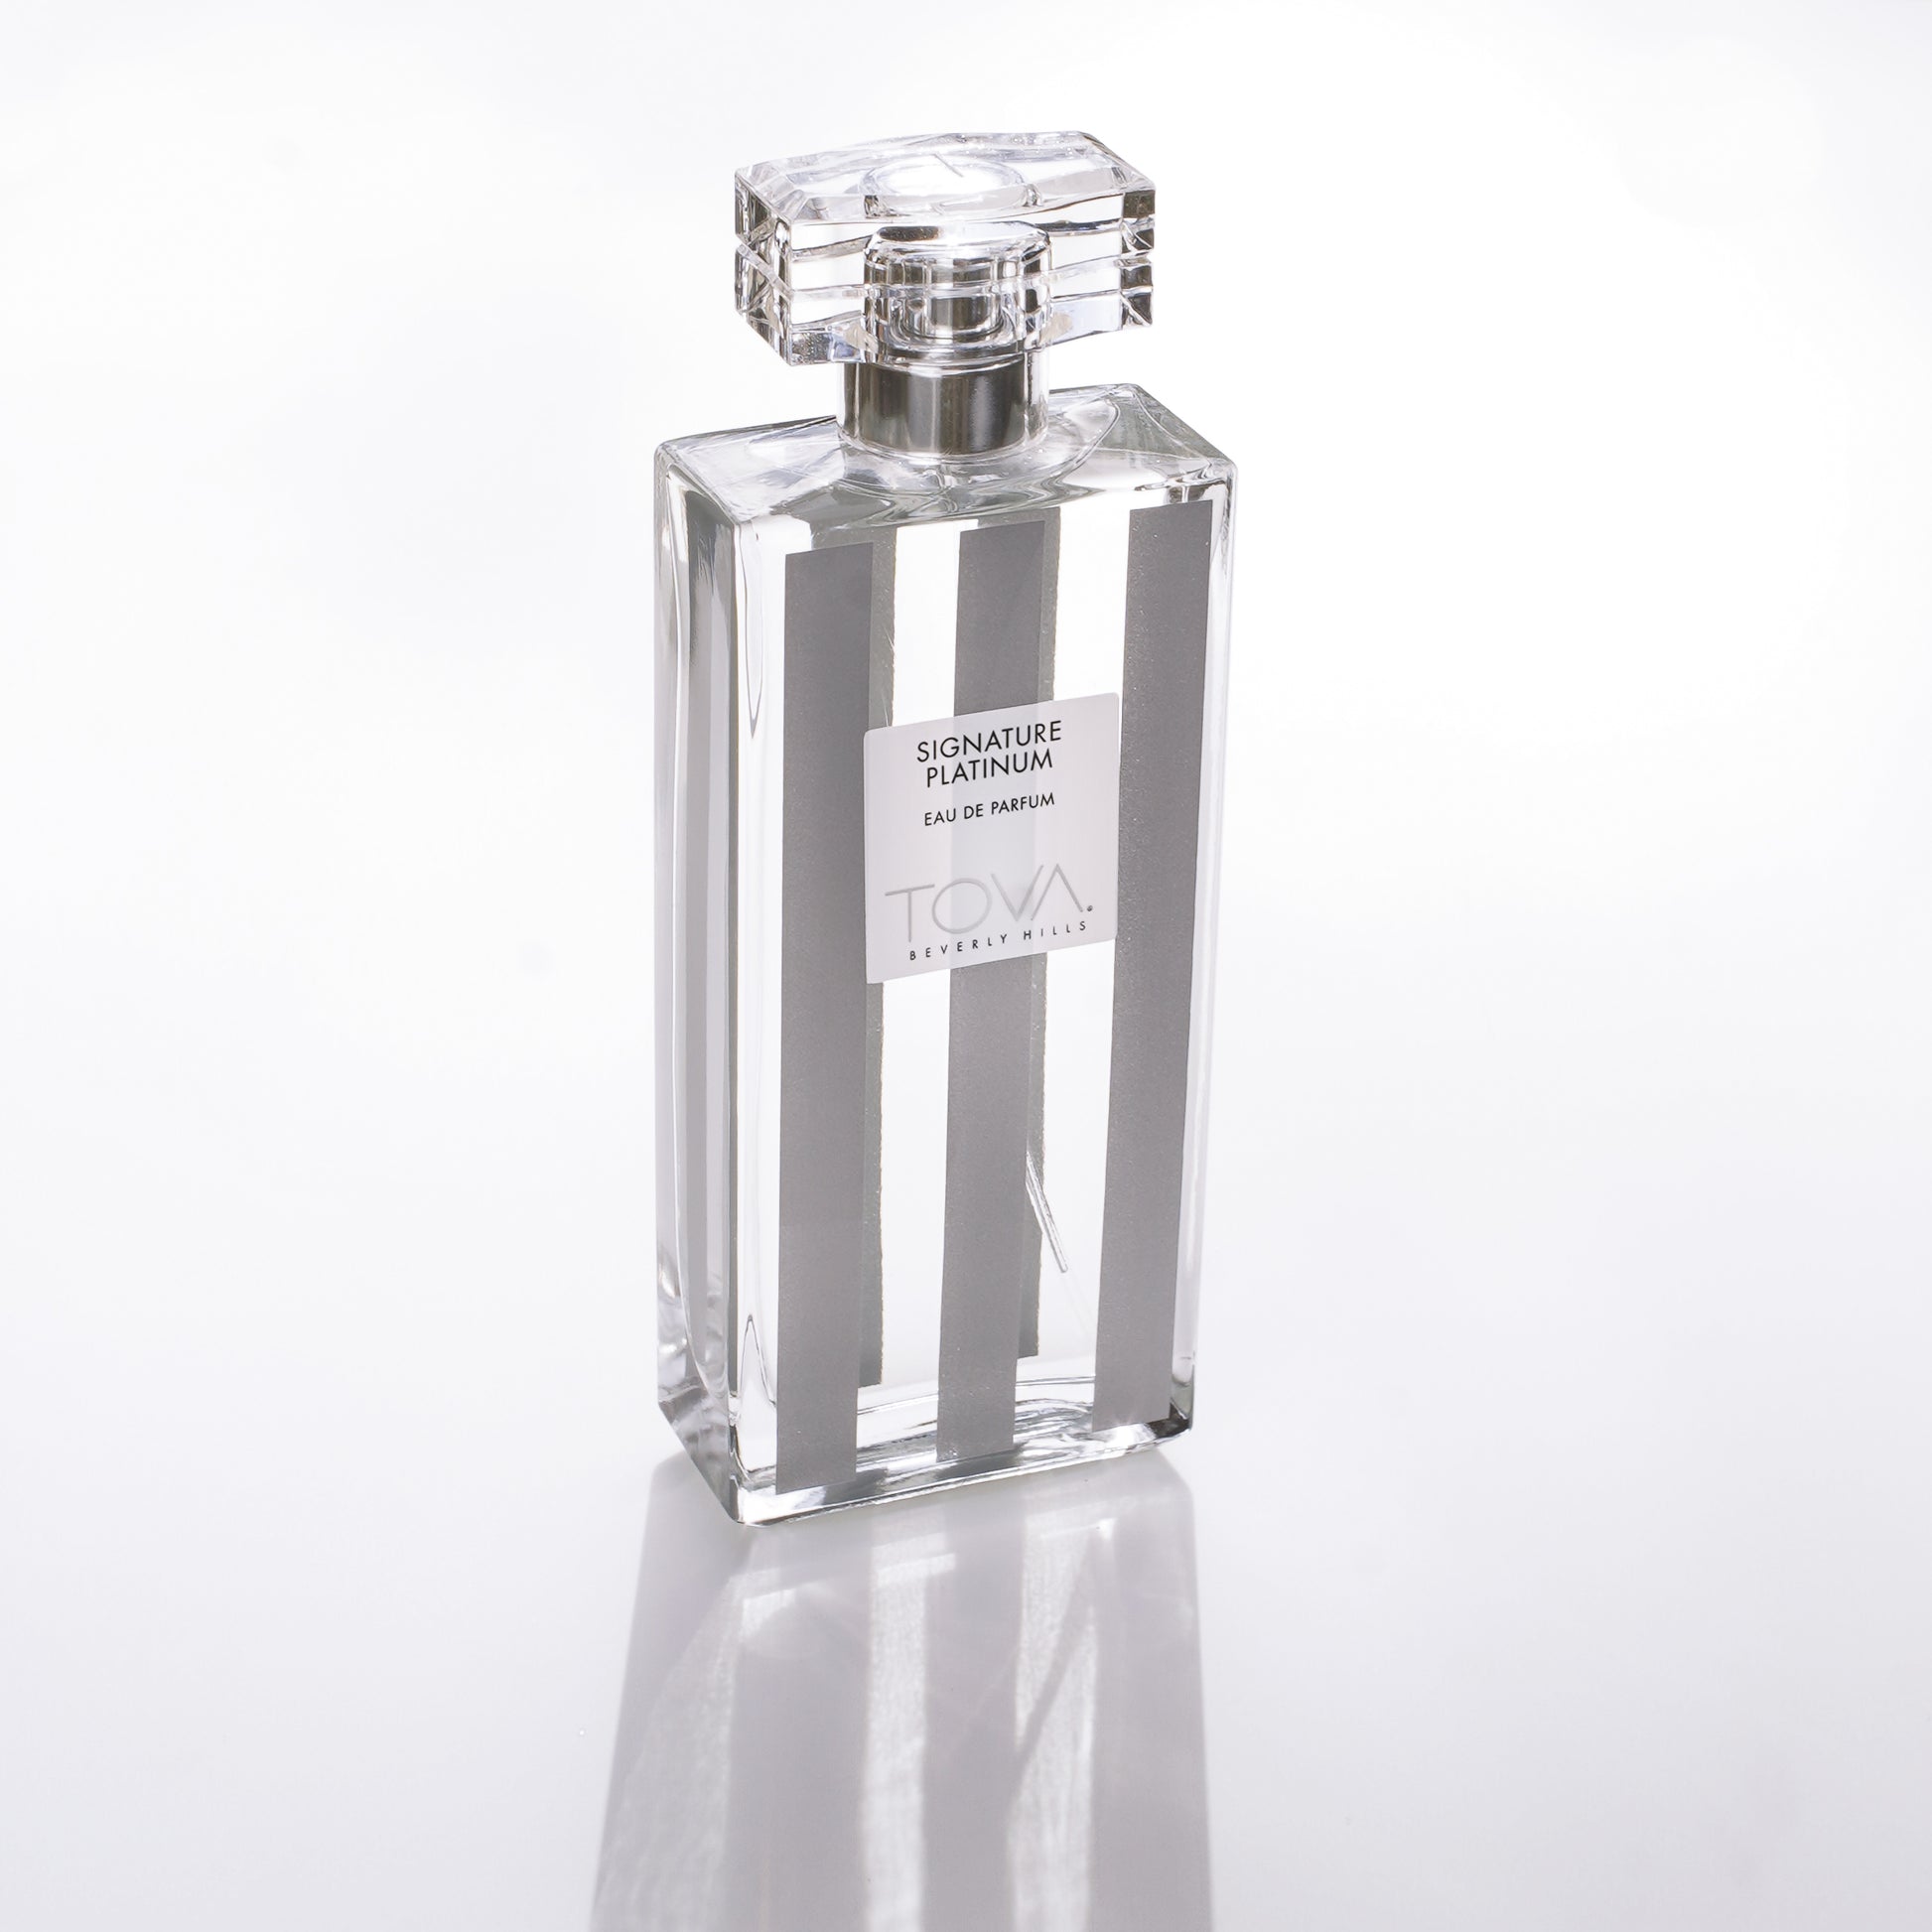 Signature Platinum Limited Edition Eau de Parfum 3.4 fl oz – TOVA ...